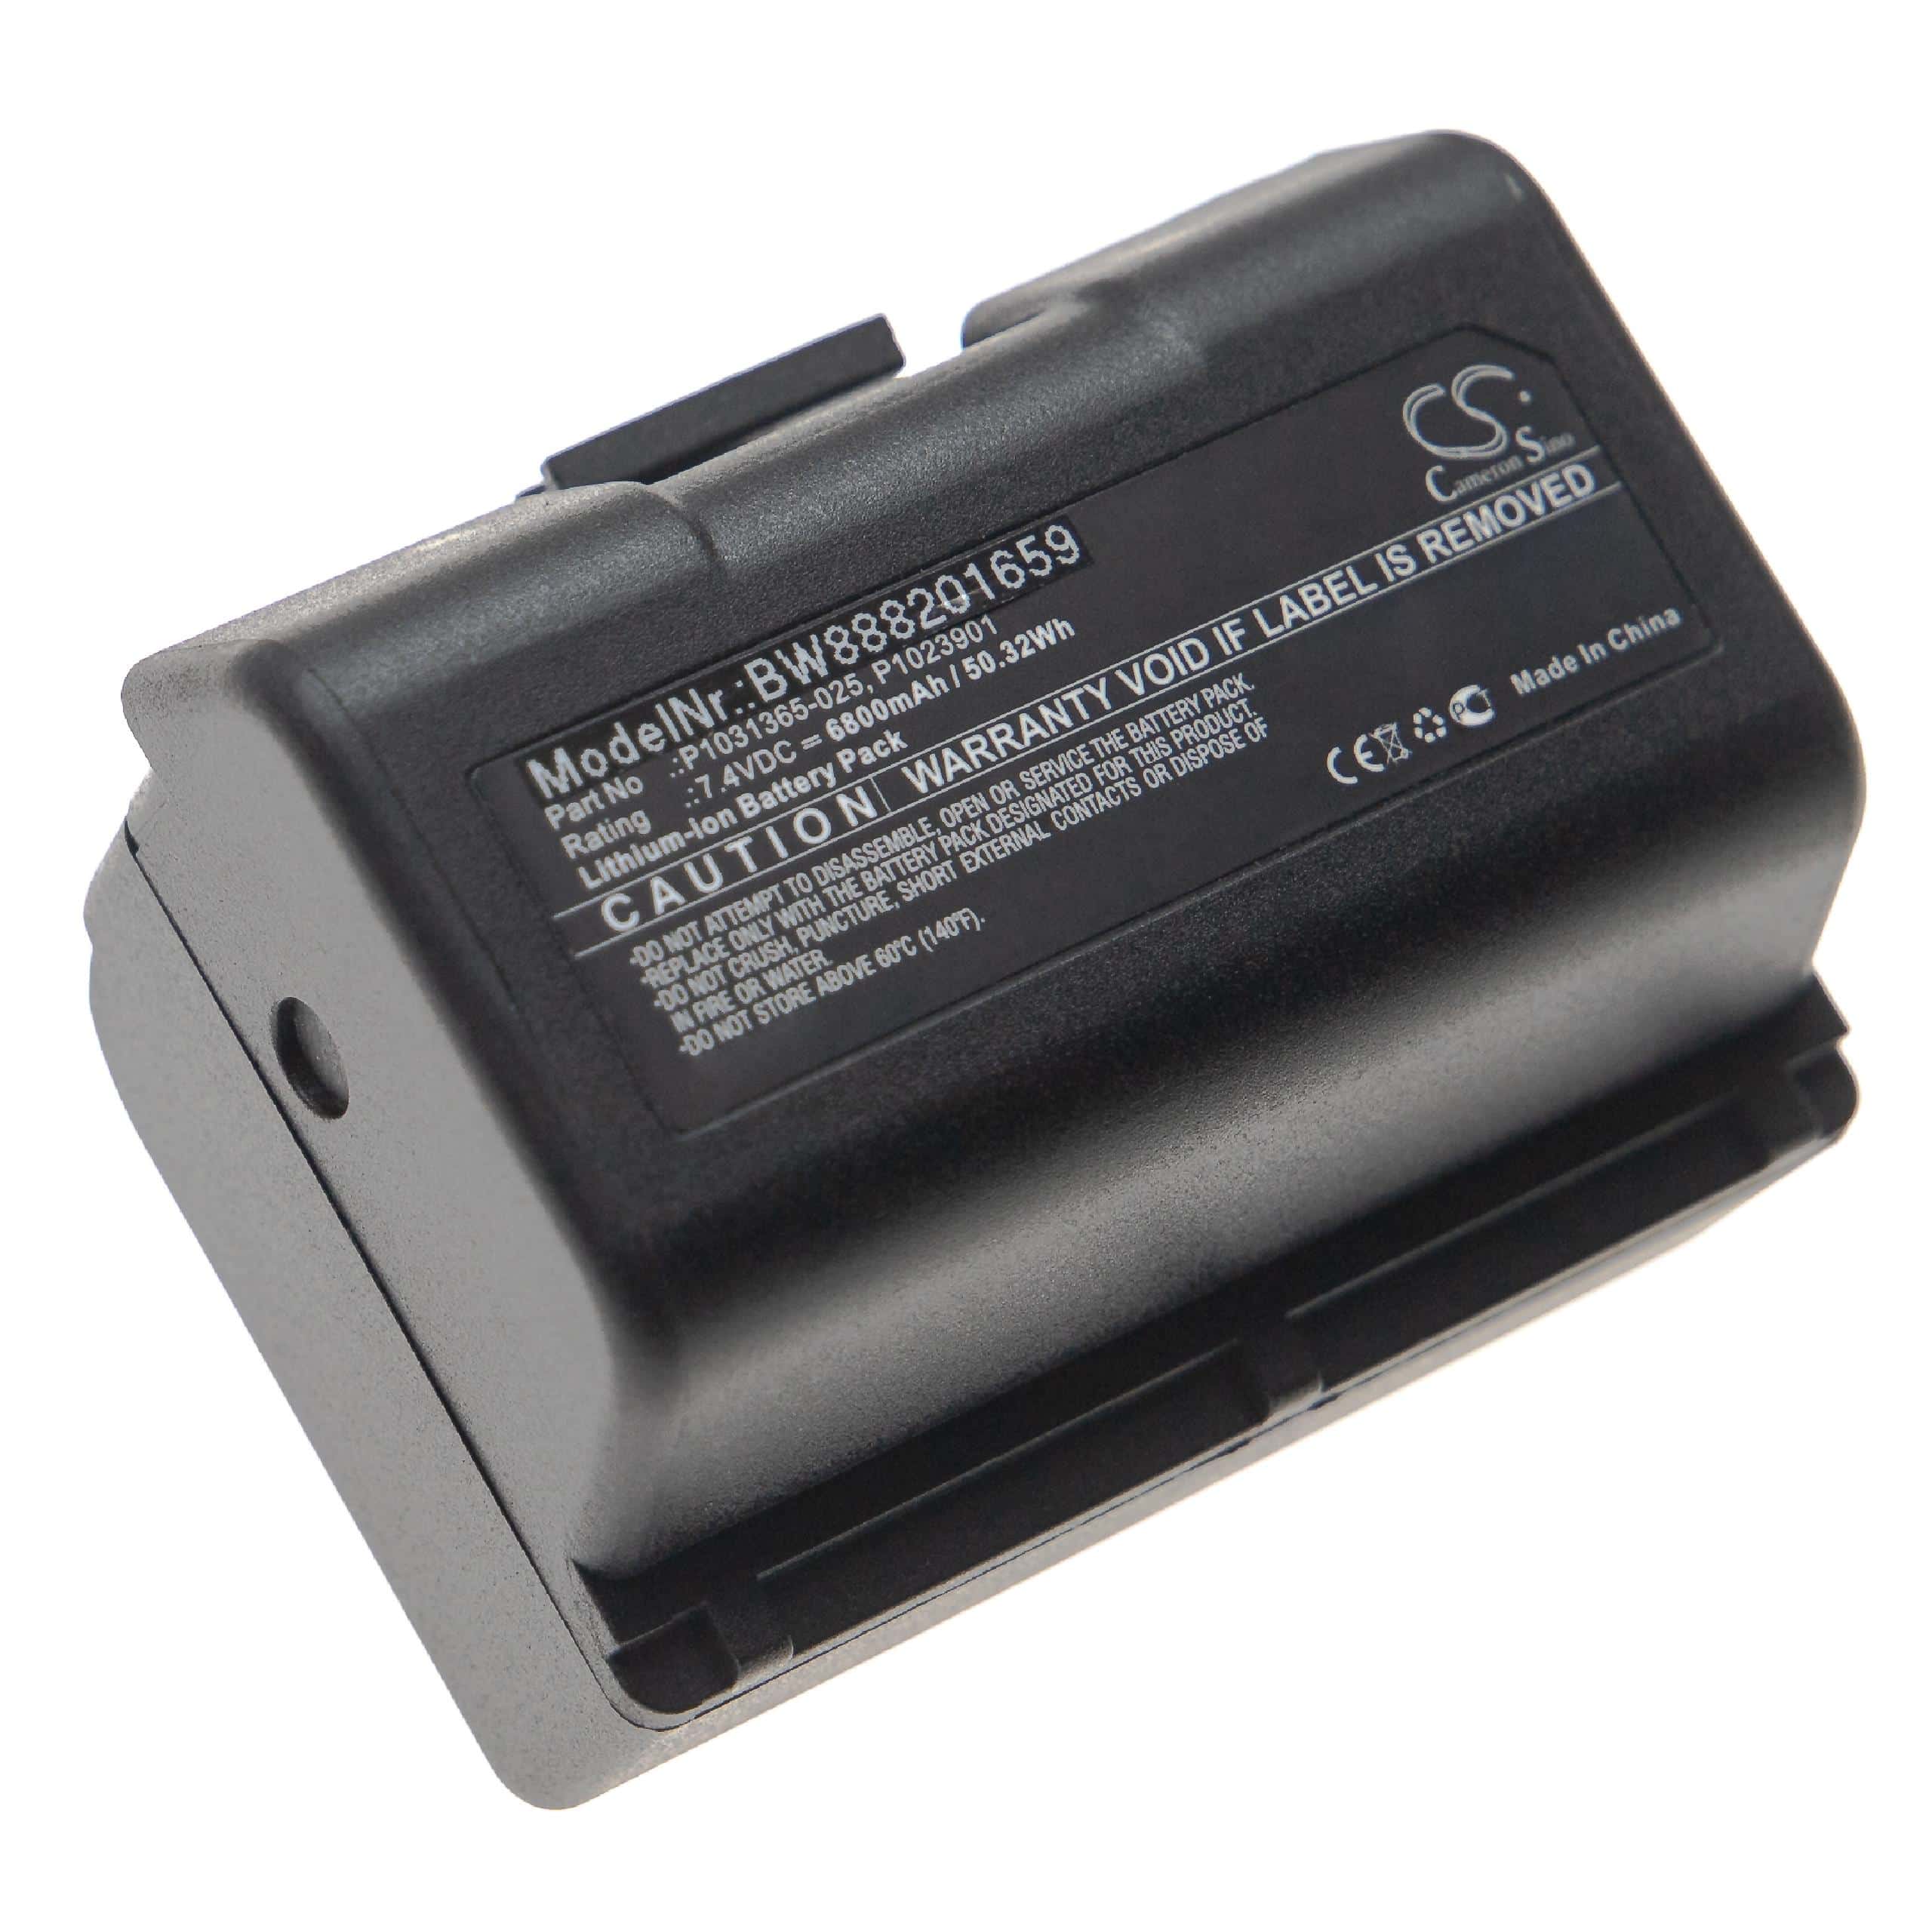 Printer Battery Replacement for Zebra AT16004, BTRY-MPP-34MA1-01, BTRY-MPP-34MAHC1-01 - 6800mAh 7.4V Li-Ion